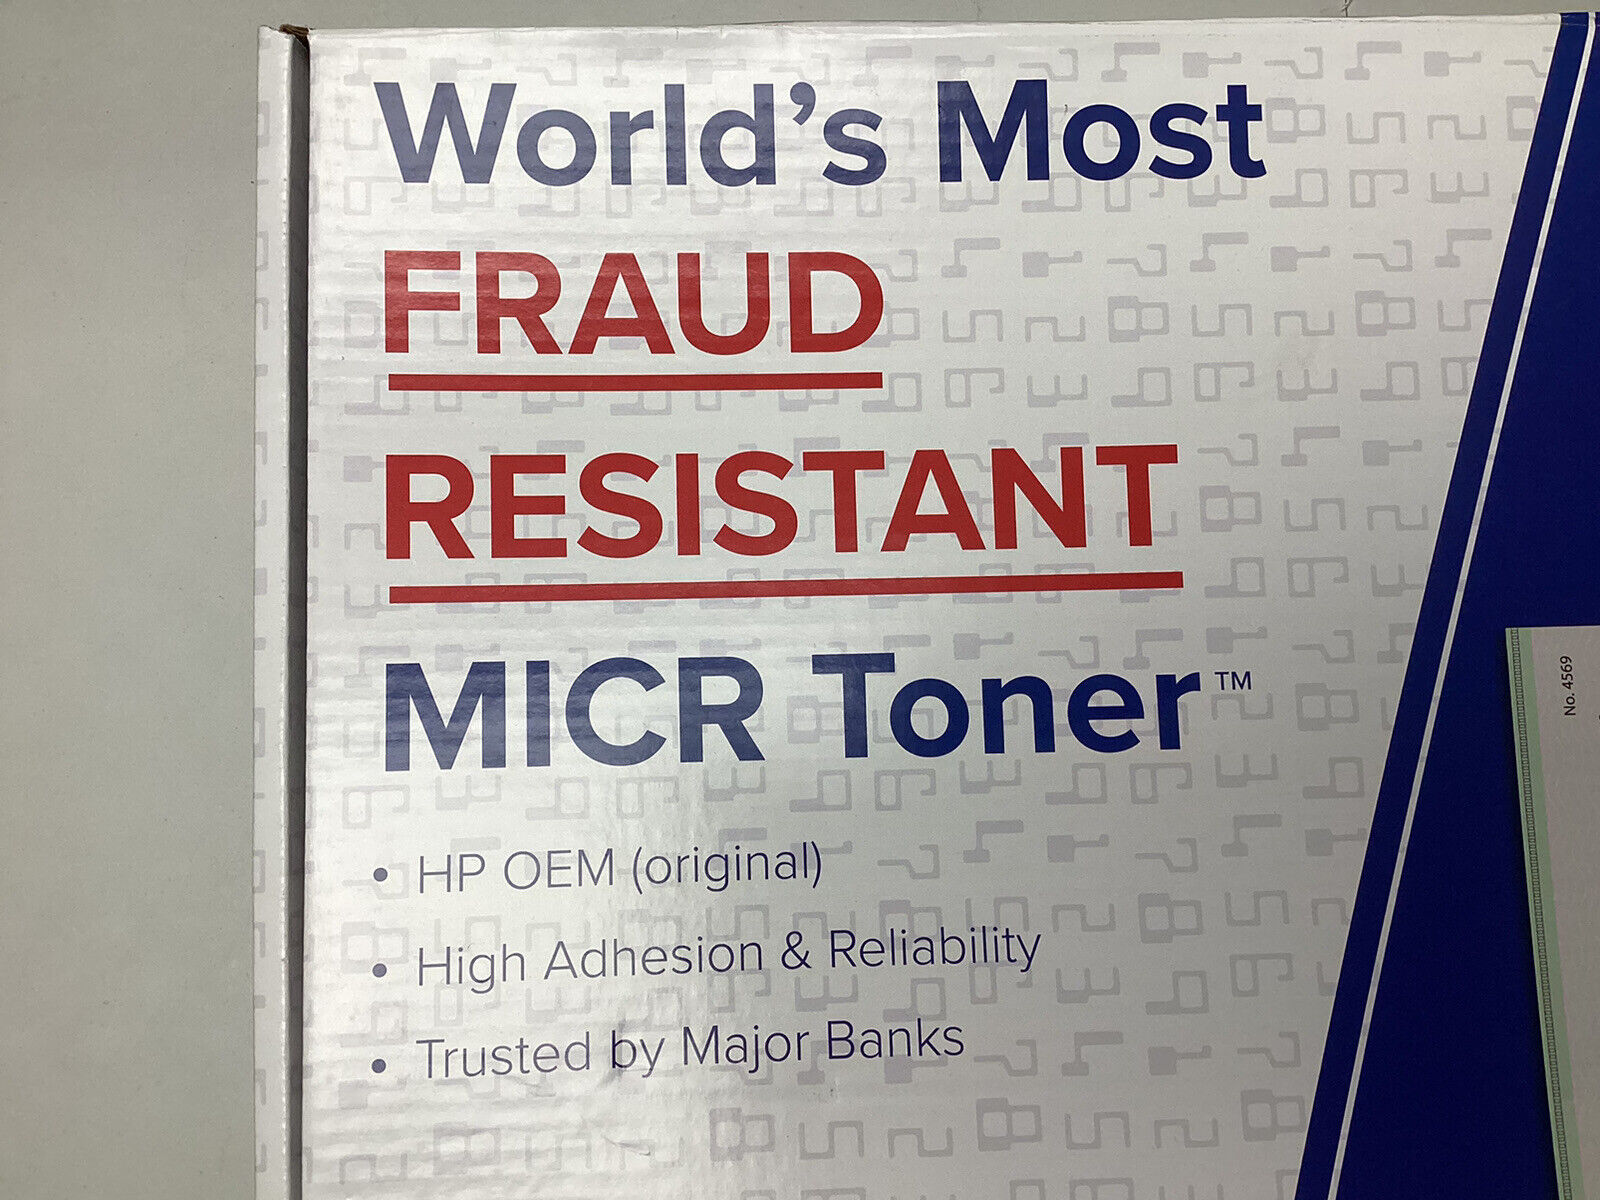 oem troy micr toner fraud resistant 02-81081-001 troy hp 9000 9040 9050 43x micr